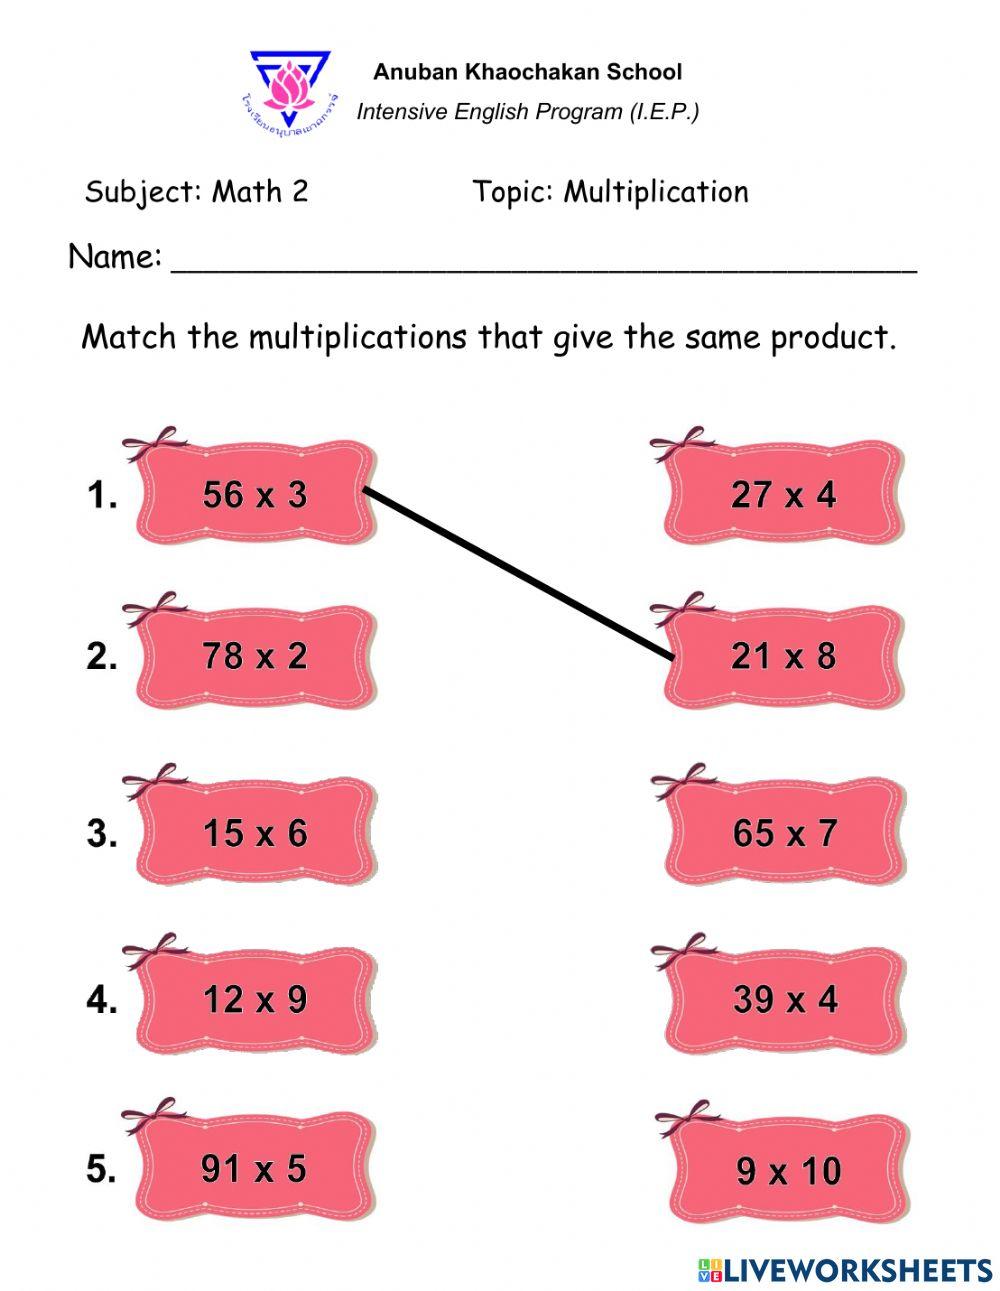 Multiplication matching